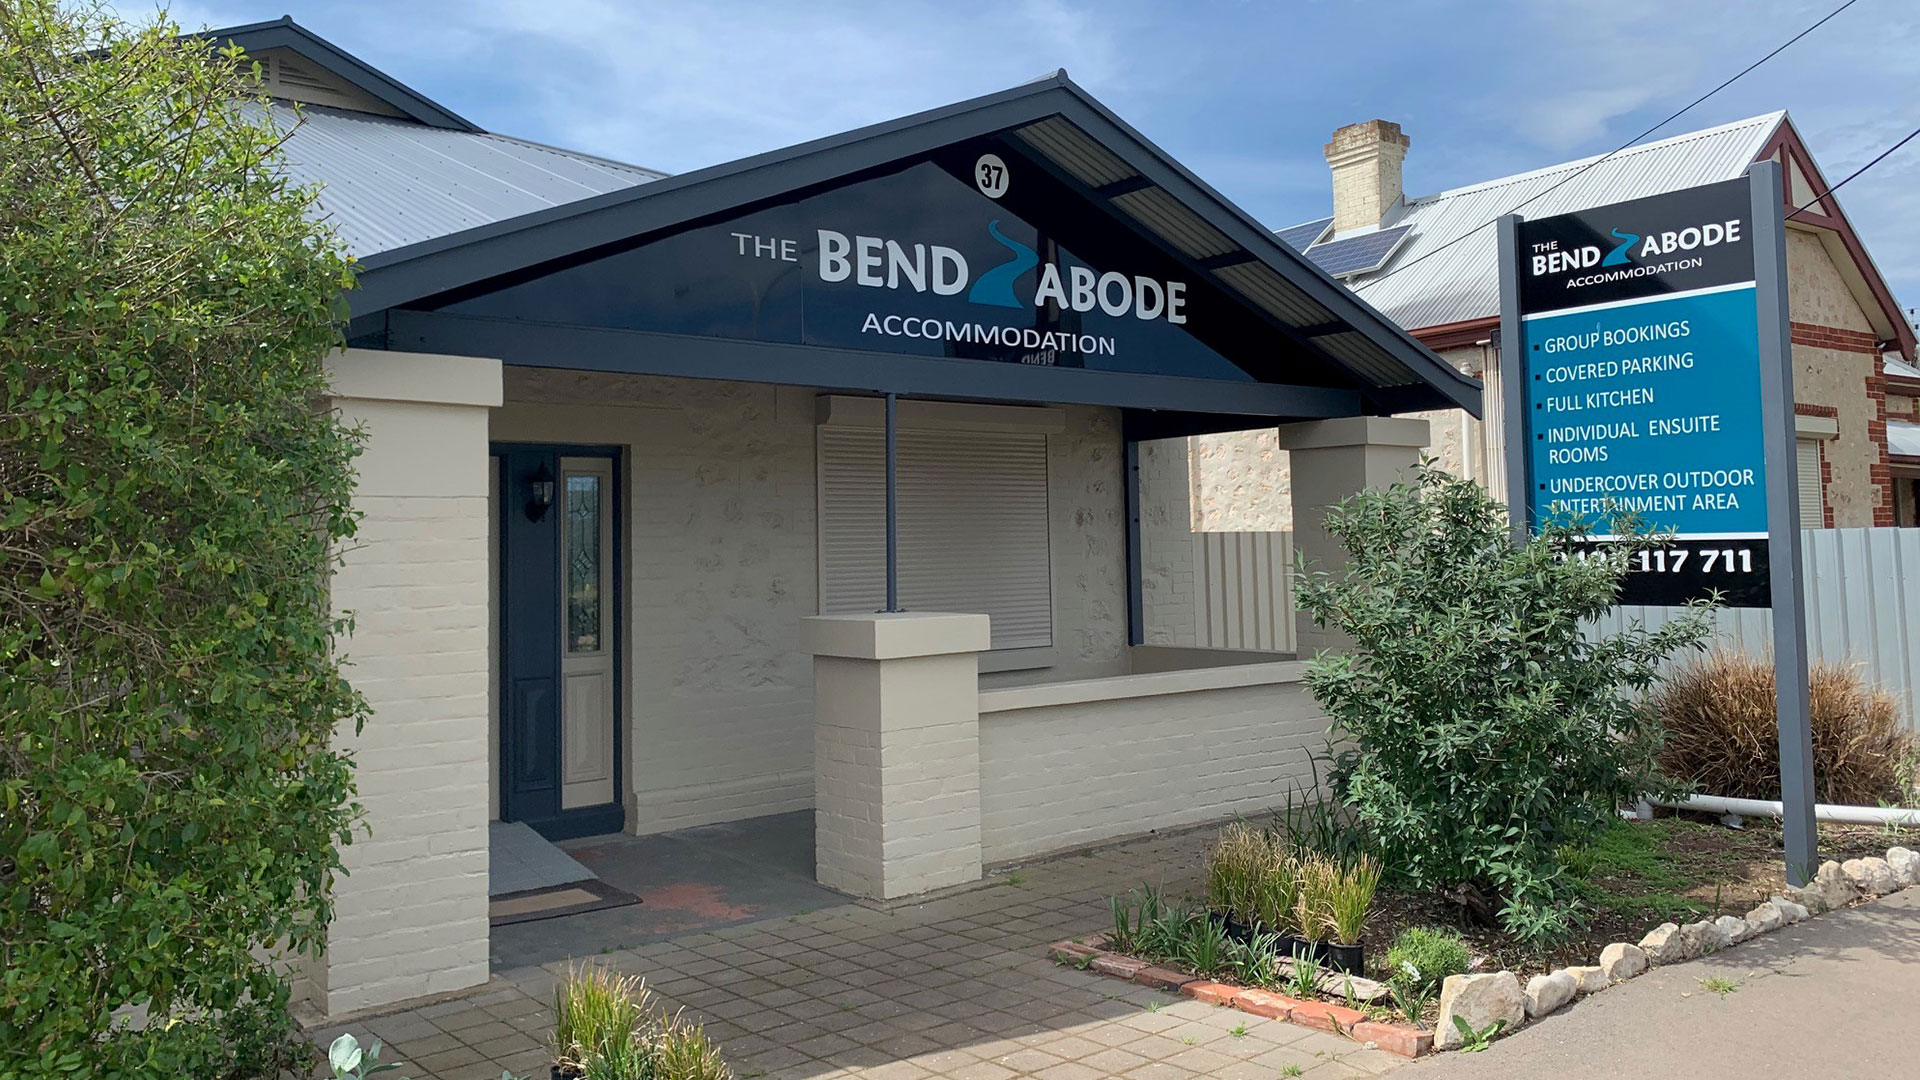 The Bend Abode - Accommodation Tailem Bend, SA